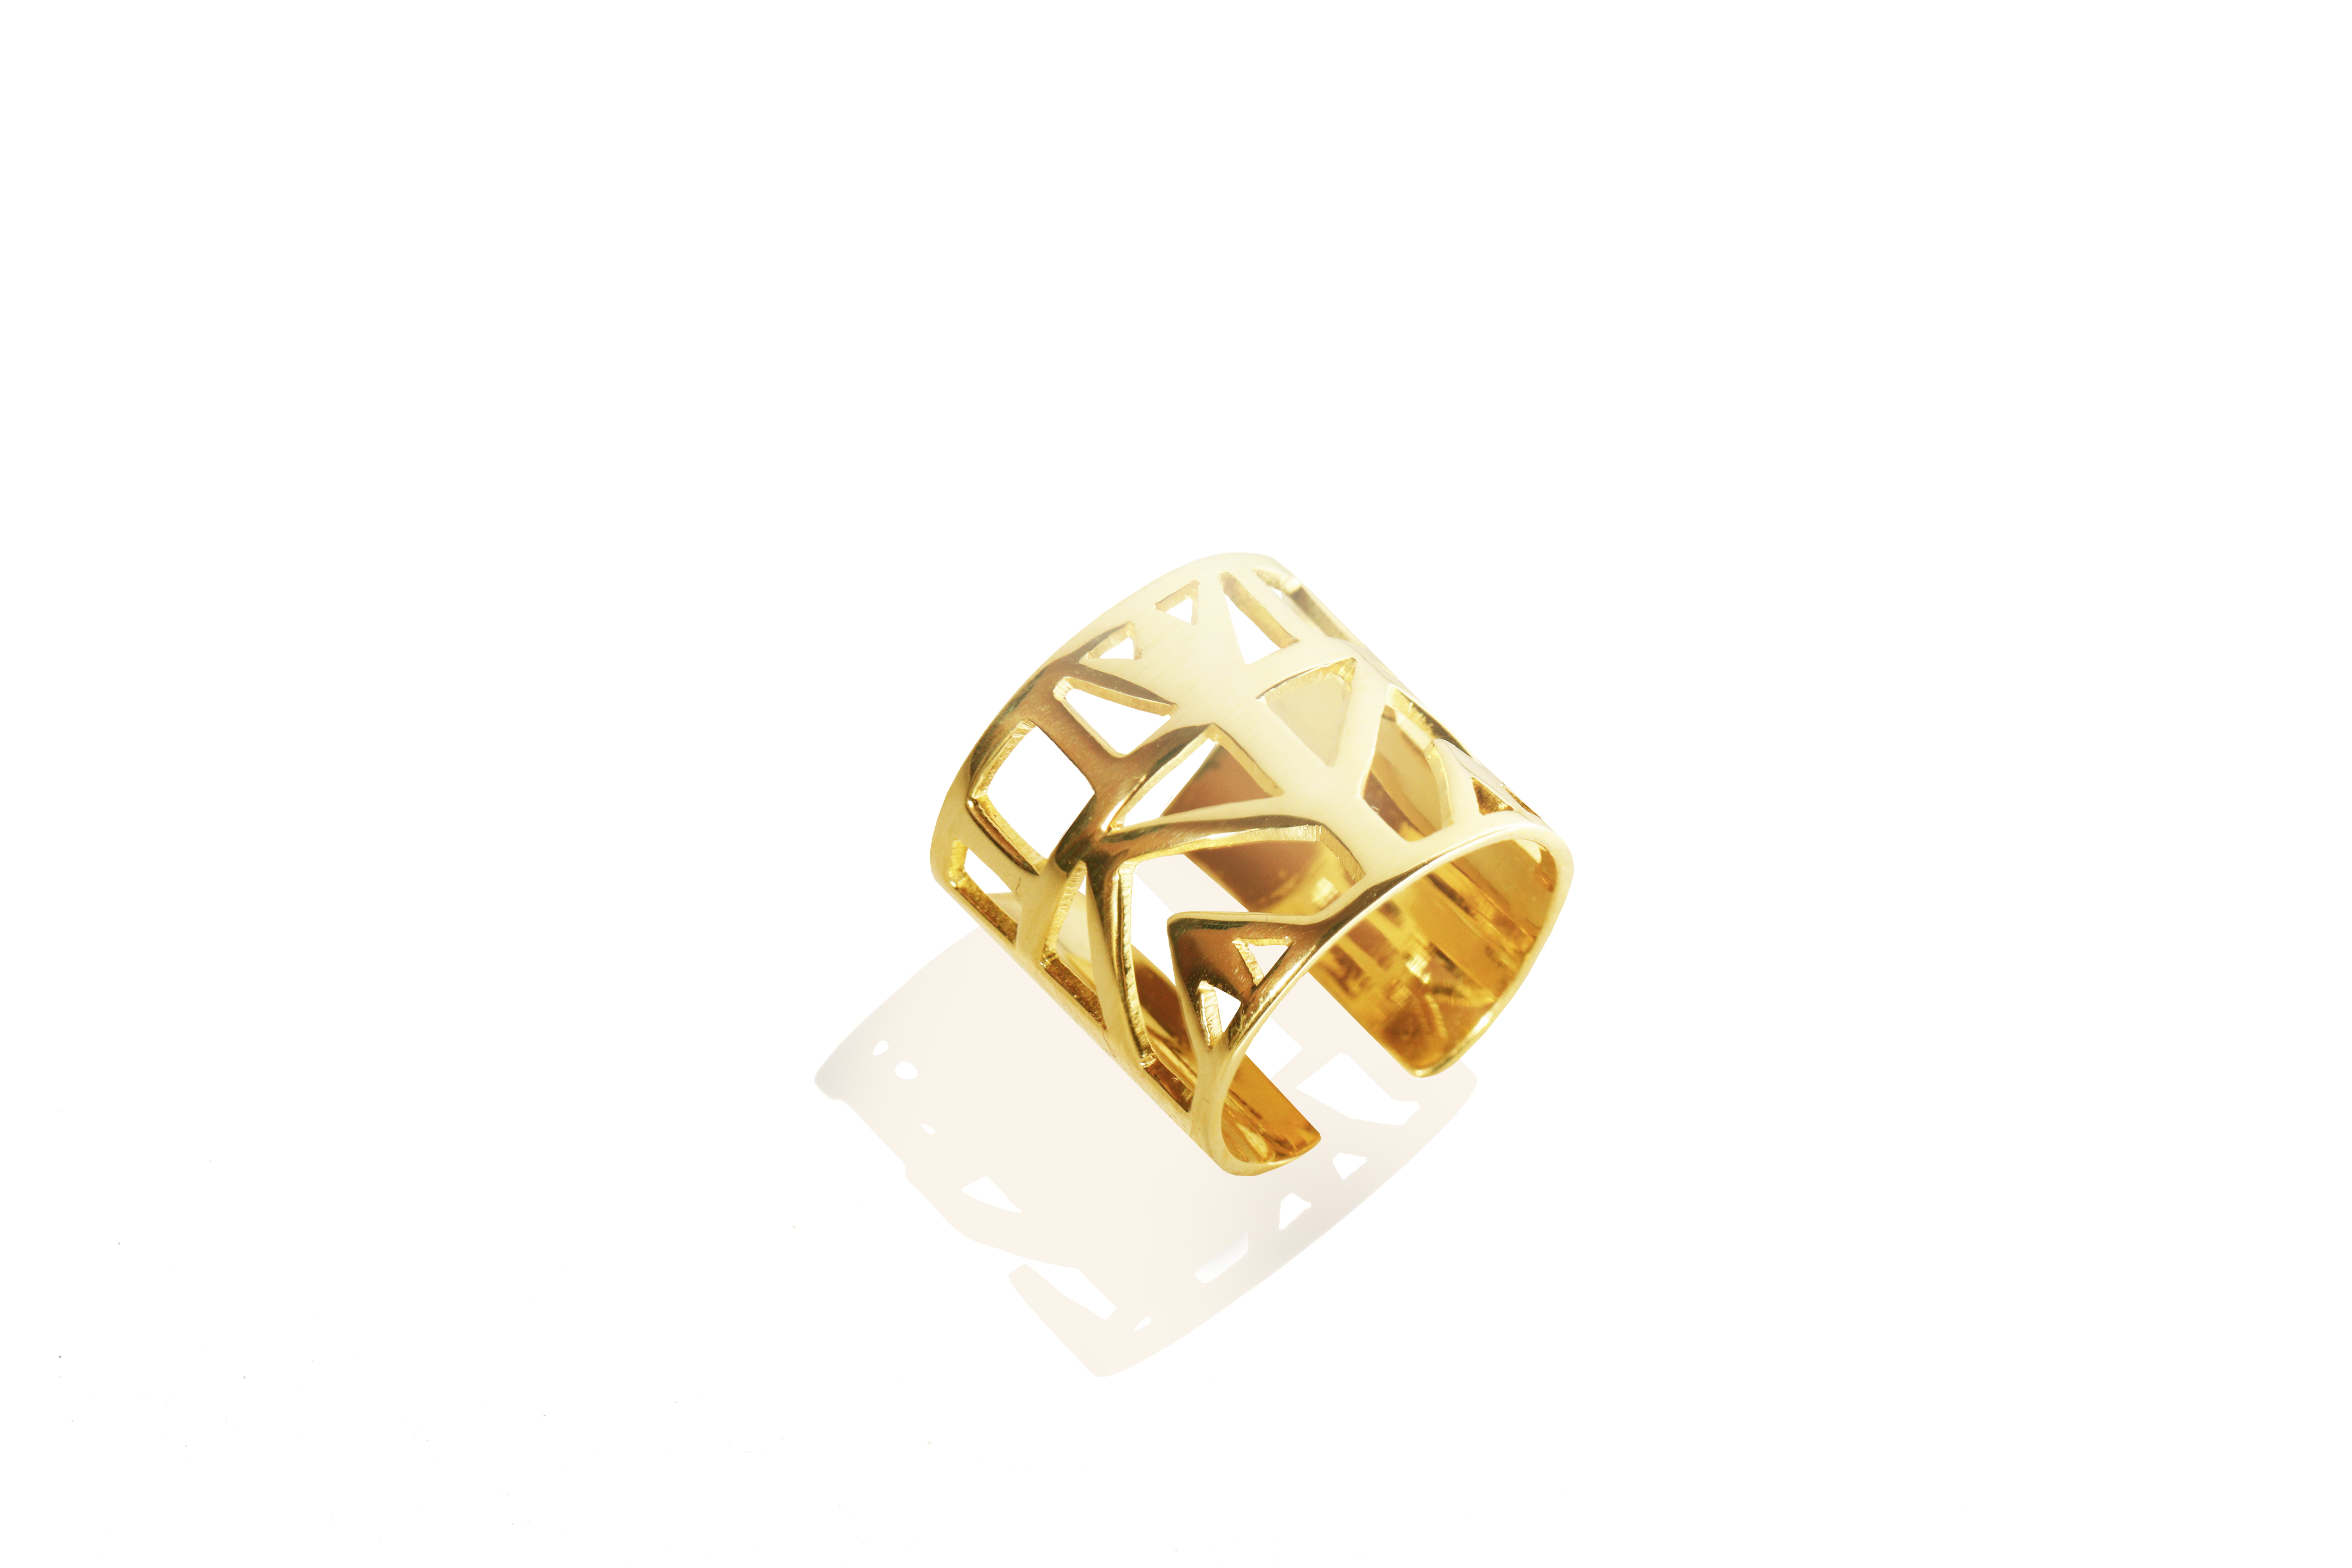 Lotus ring (18k gold plated finish)